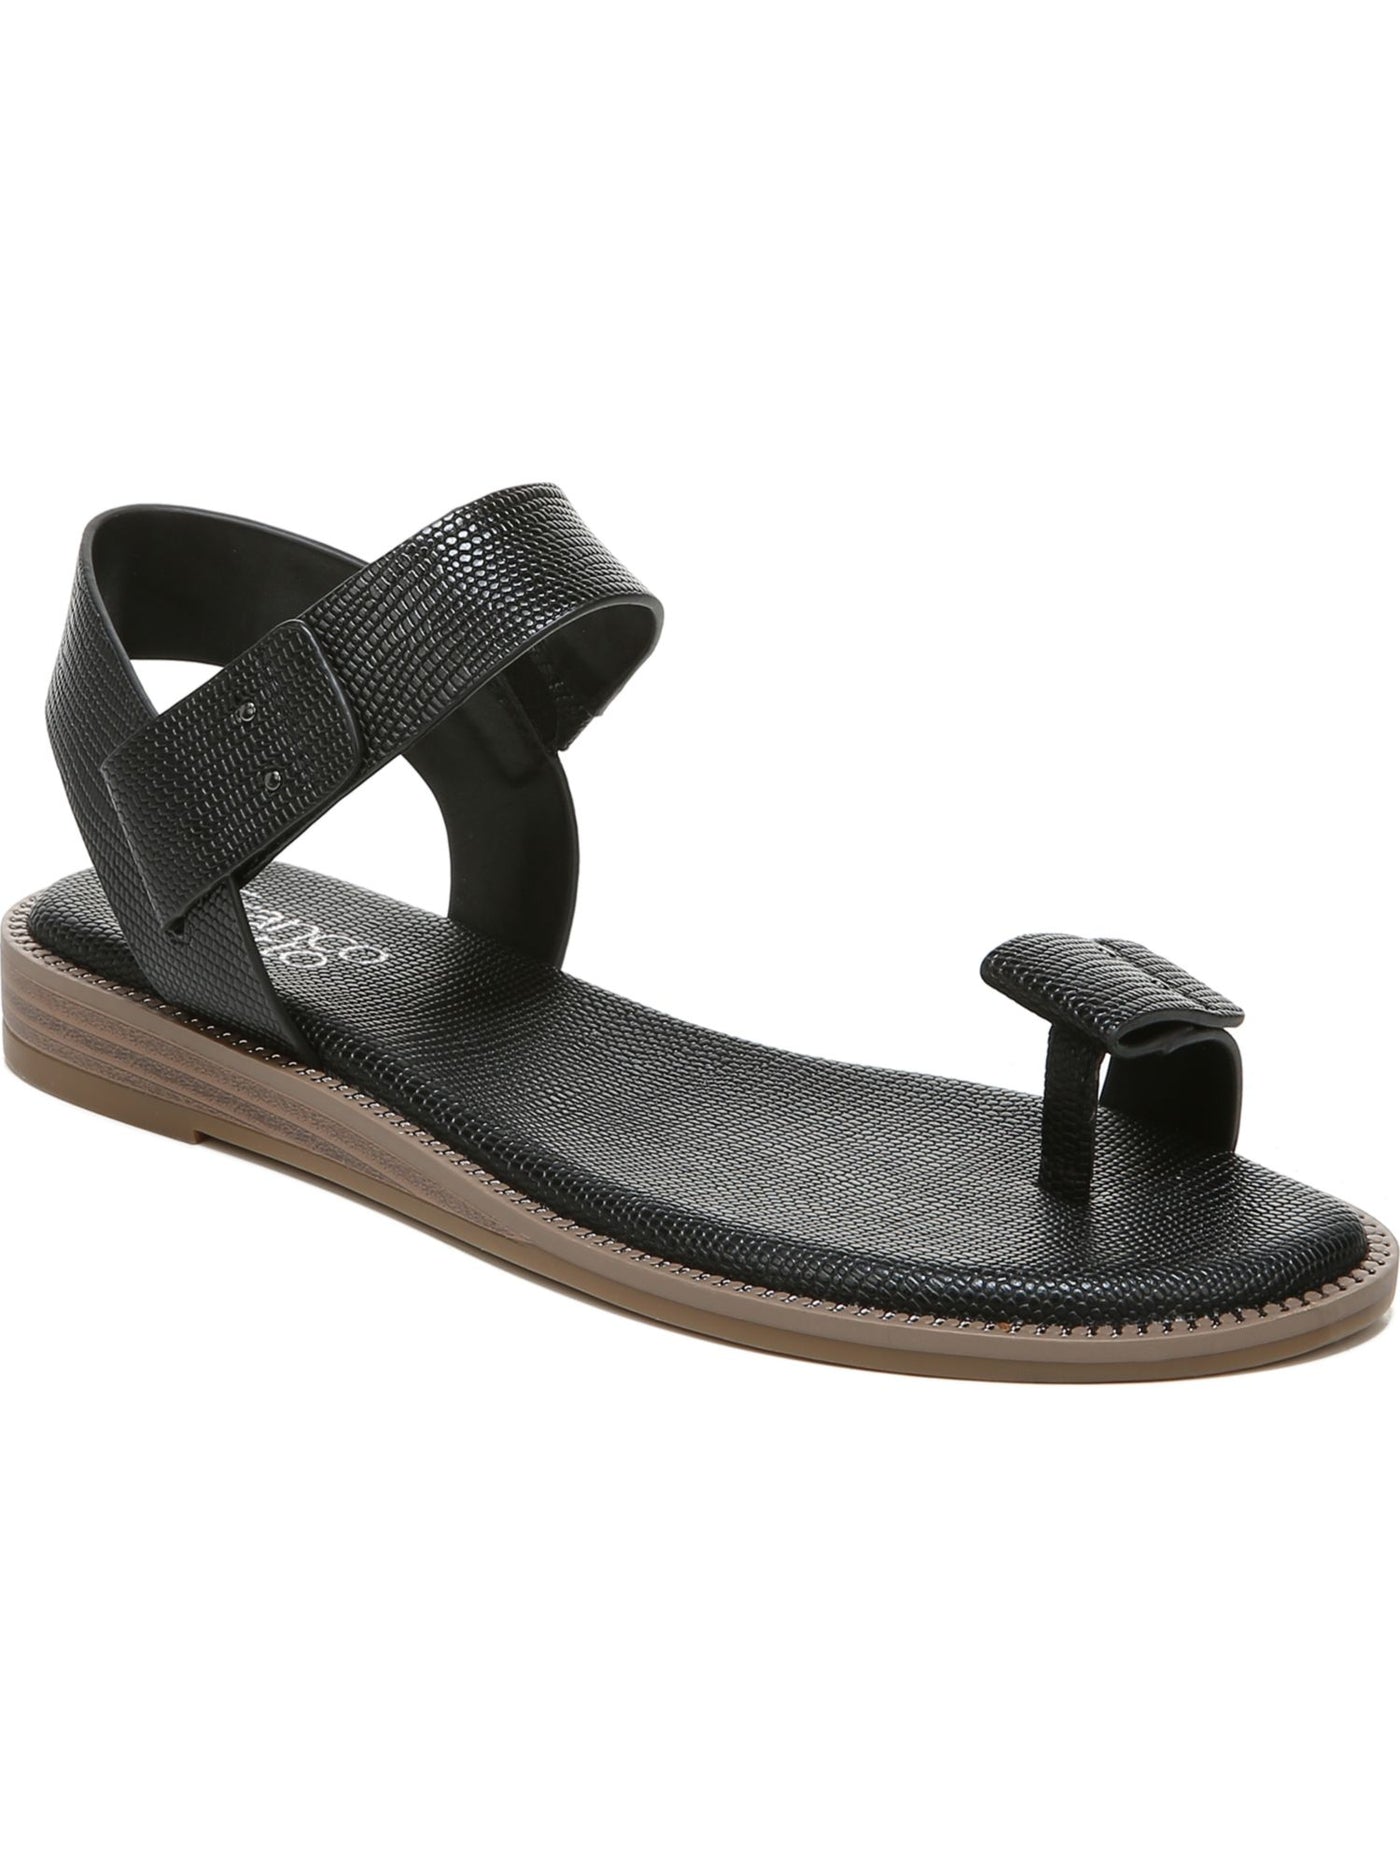 FRANCO SARTO Womens Black Snakeskin Comfort Geranio Round Toe Slip On Sandals Shoes 7.5 M